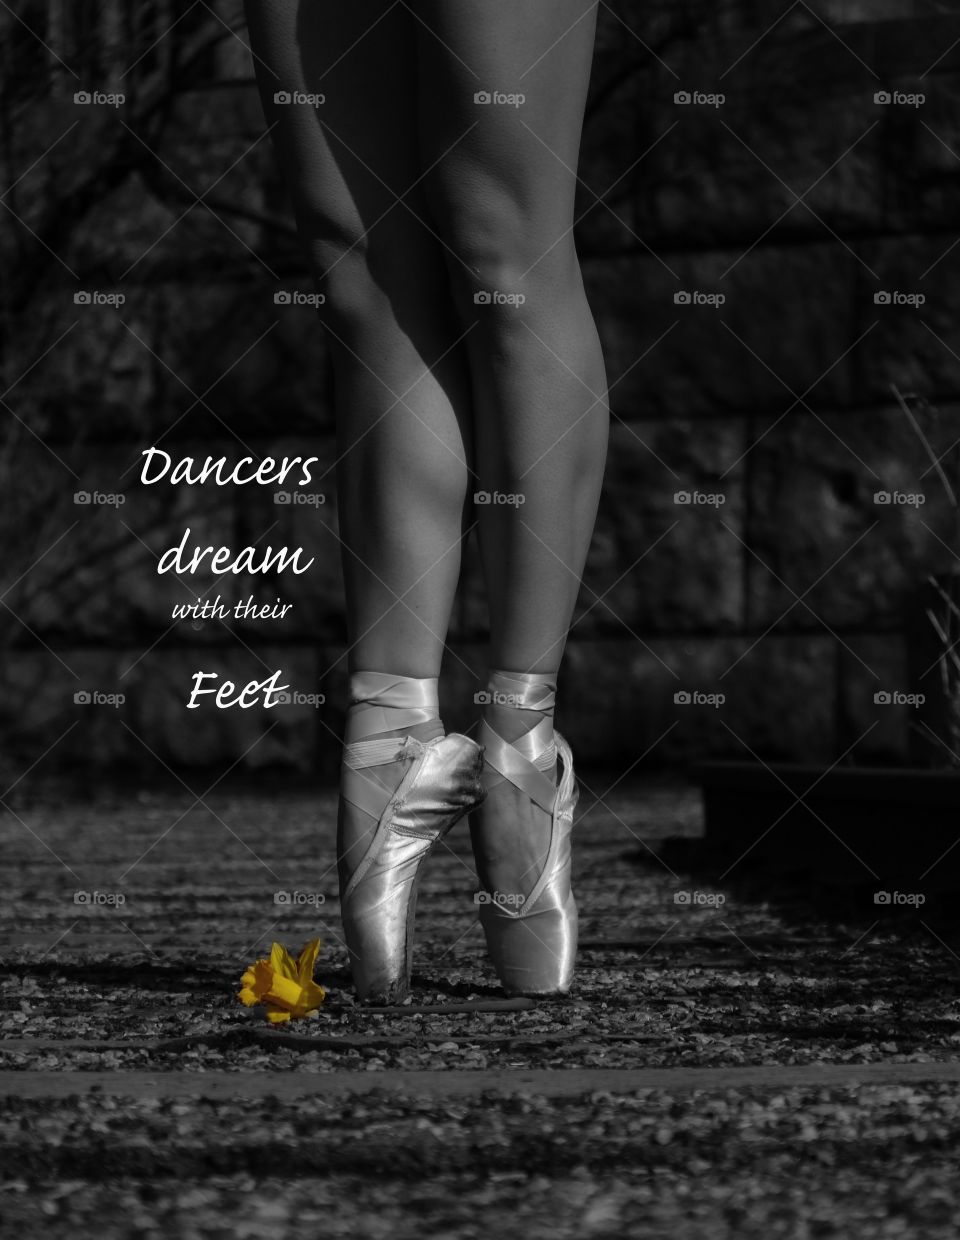 Dancer photo / poster 